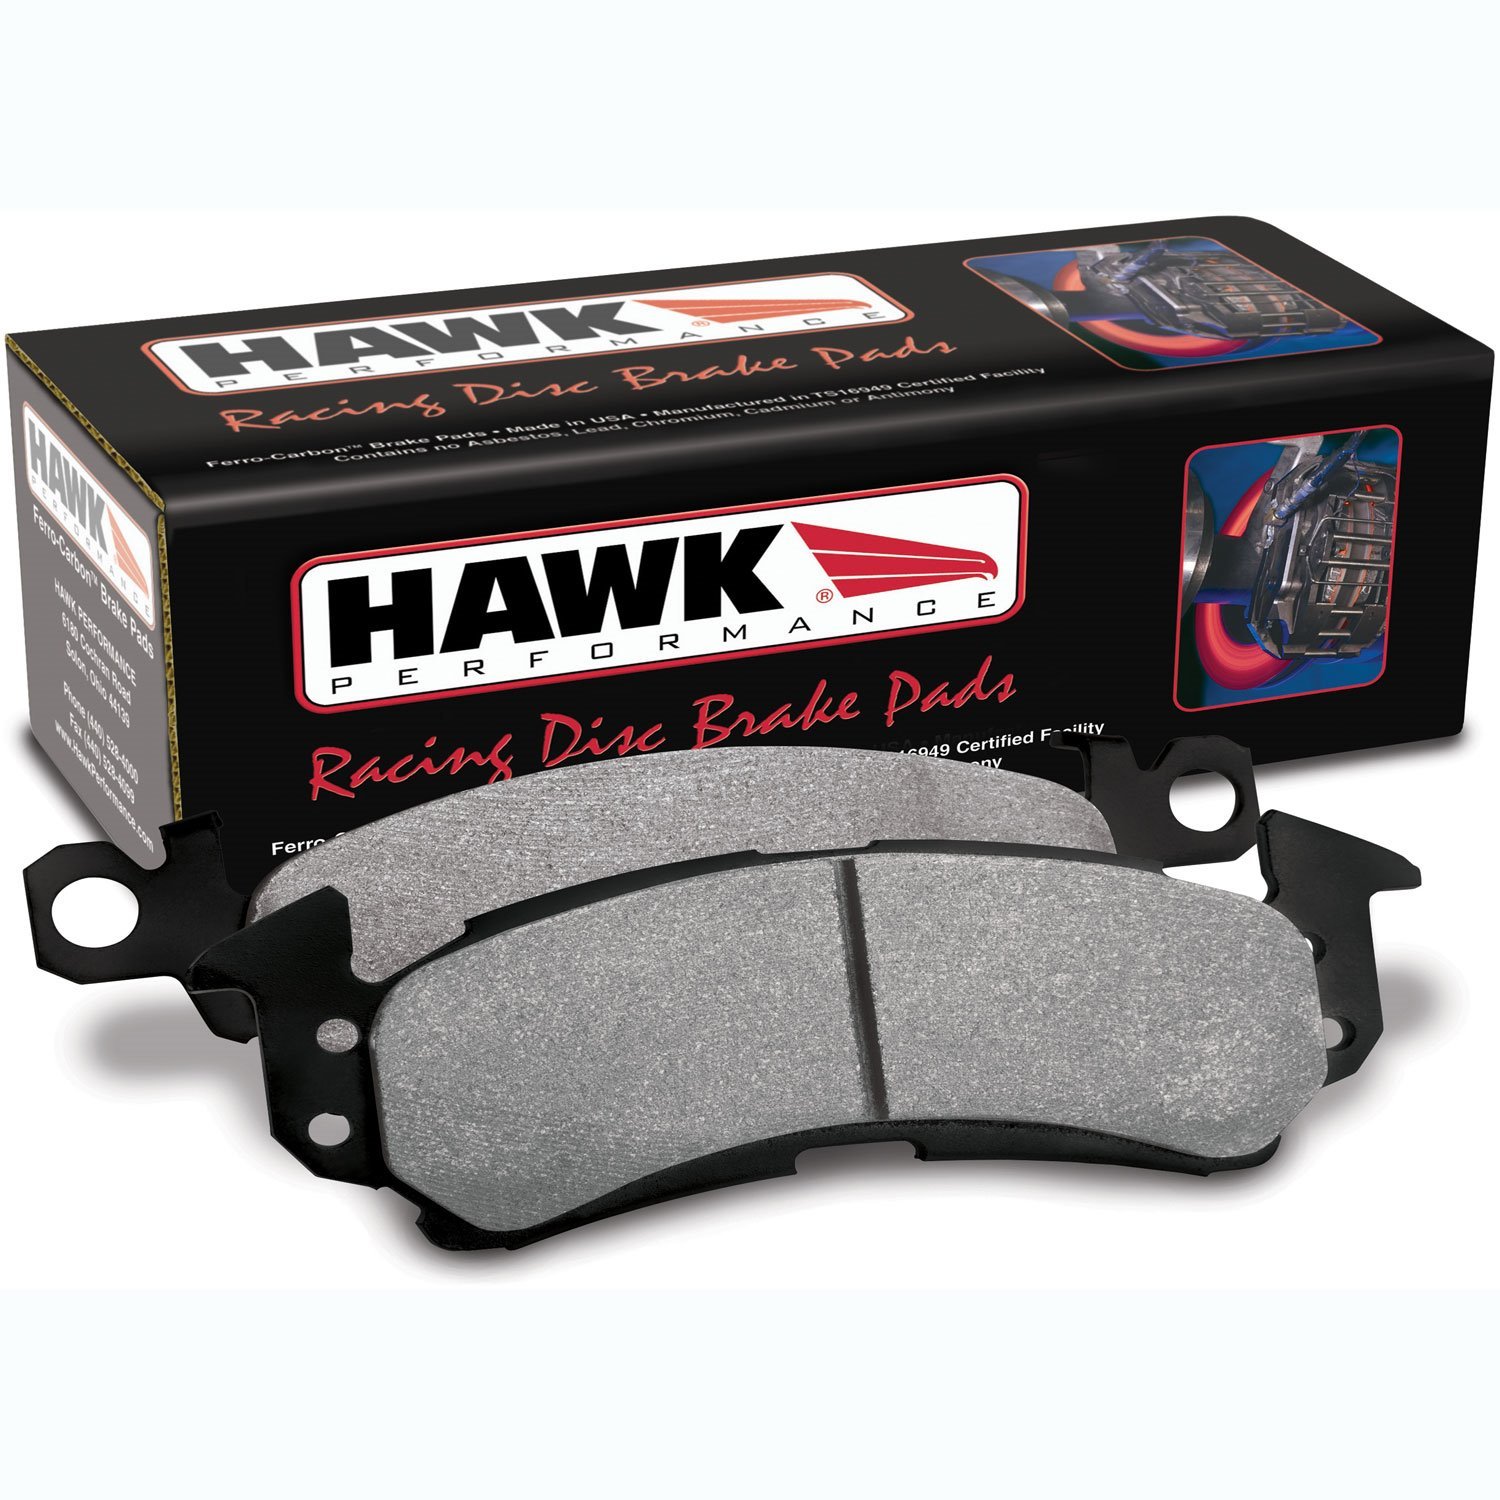 Disc Brake Pad HP Plus w/0.610 Thickness